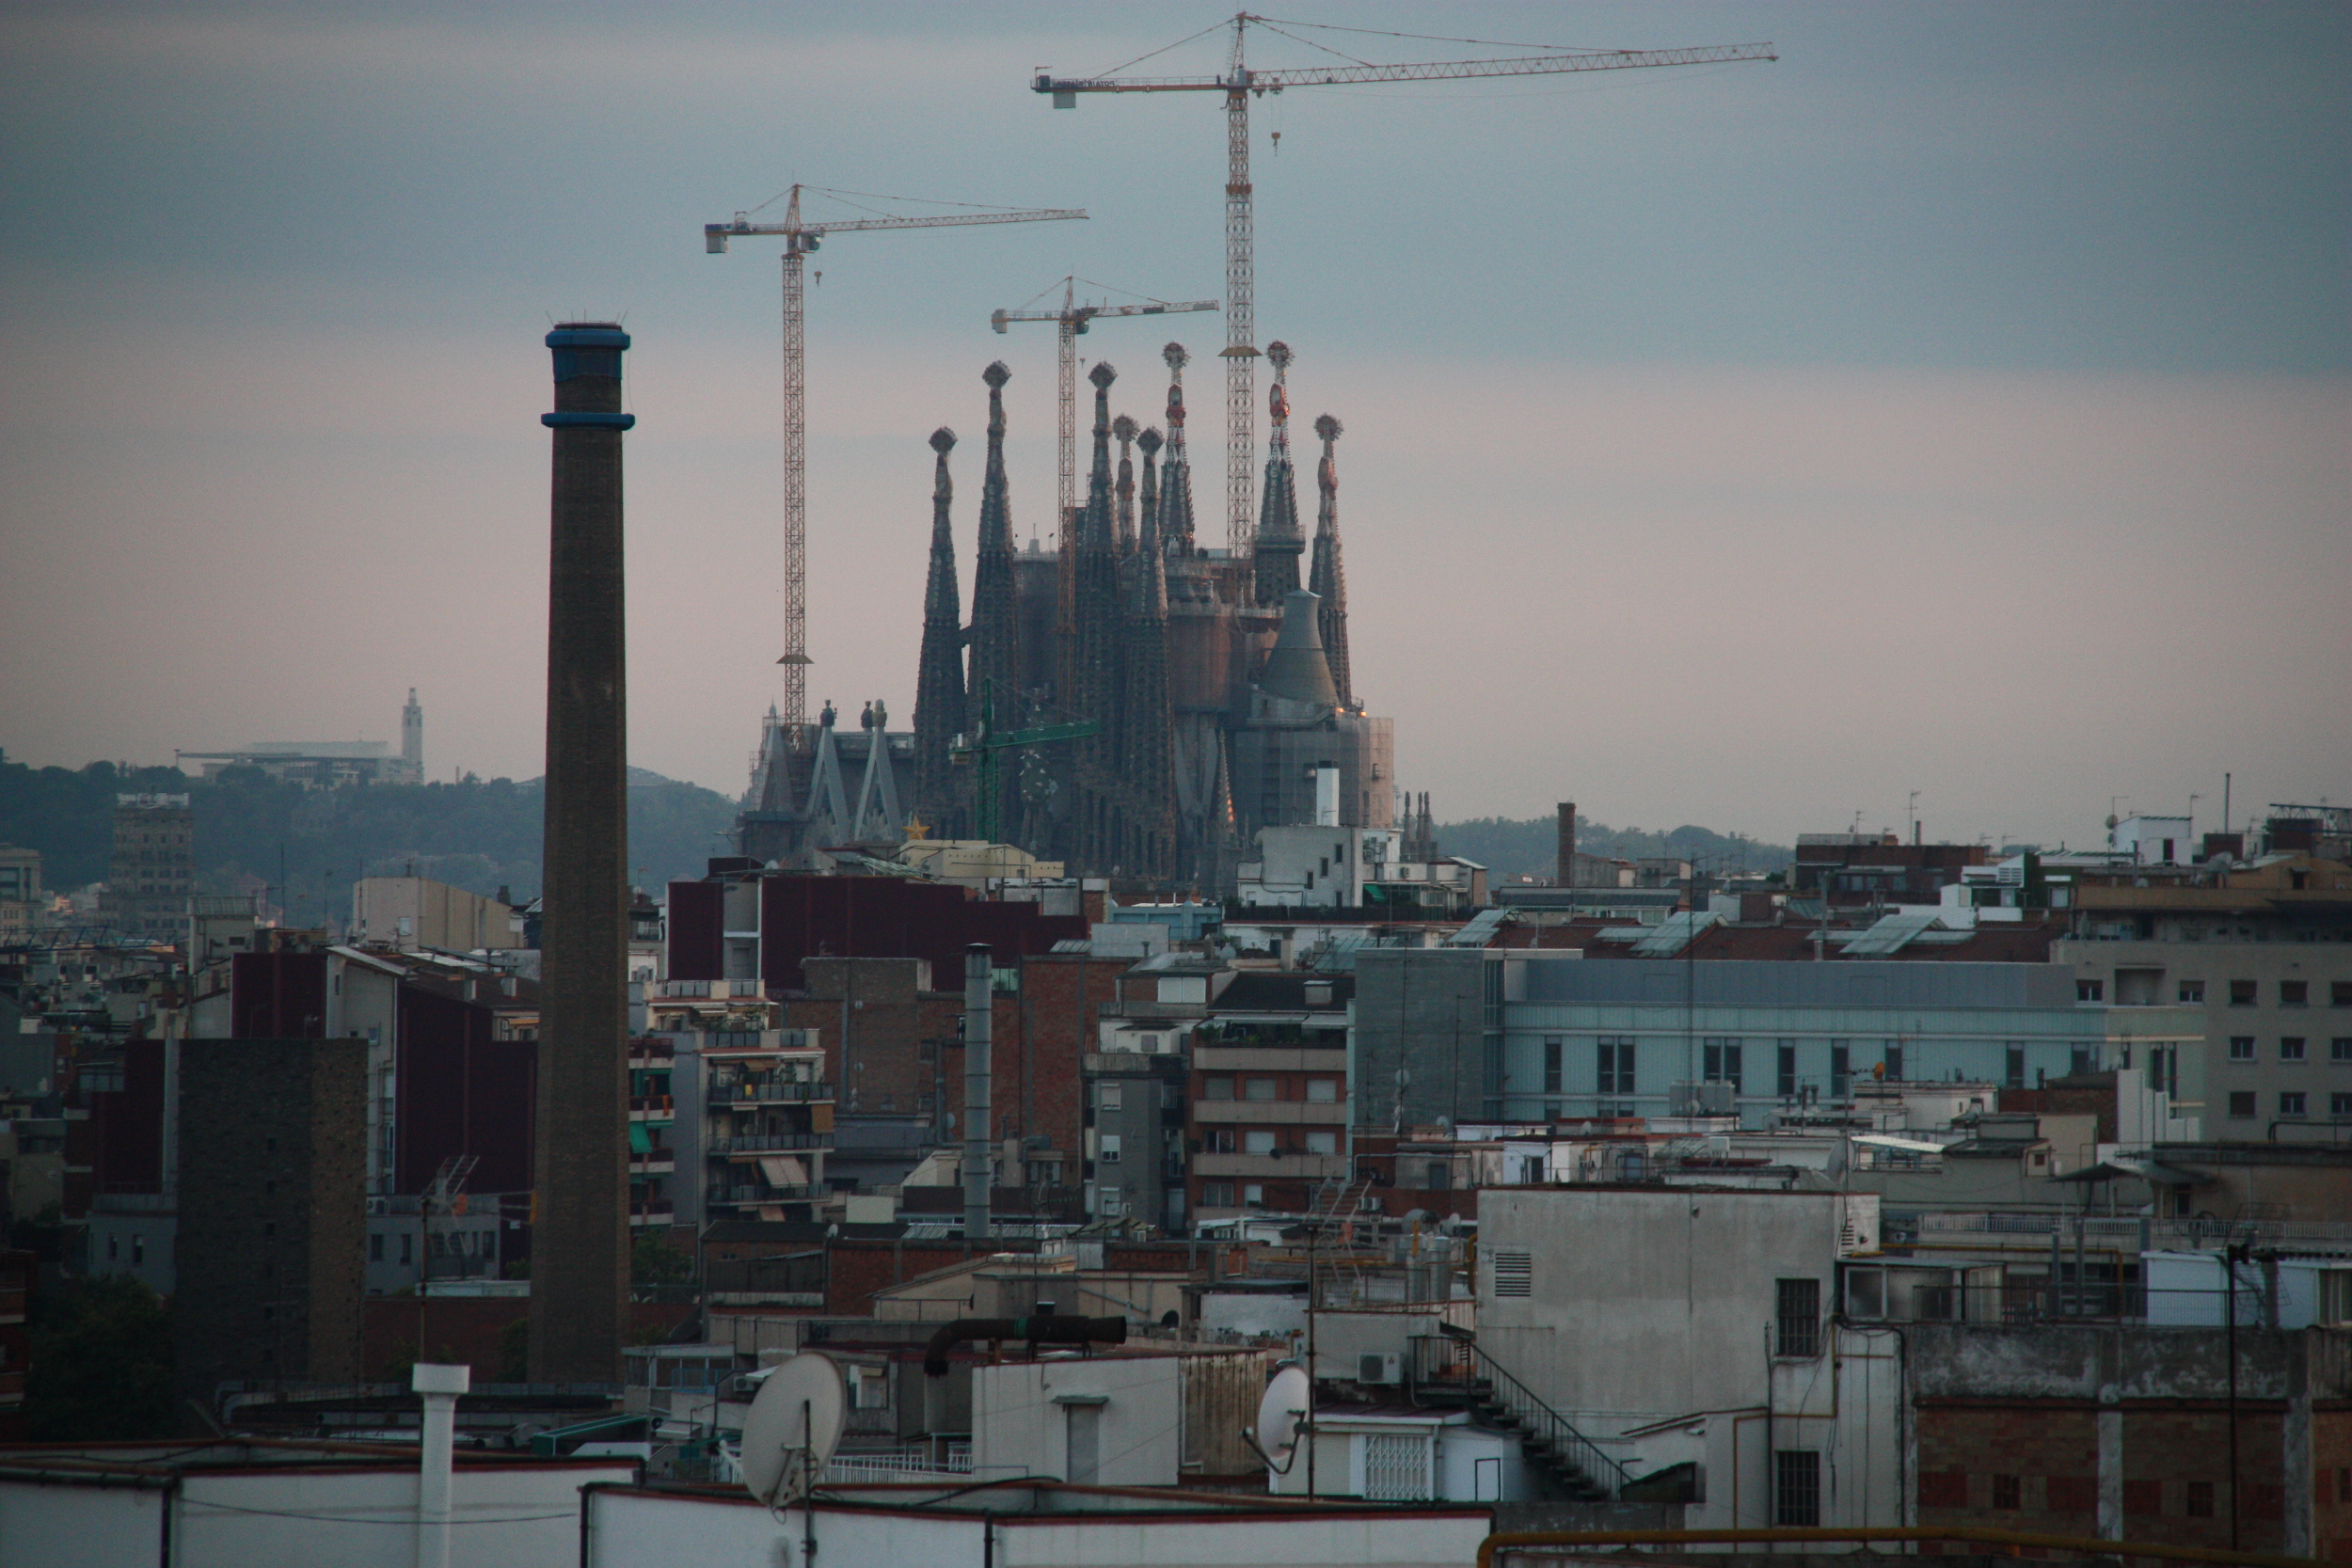 Sagrada Familia basilica in Barcelona (by ACN)